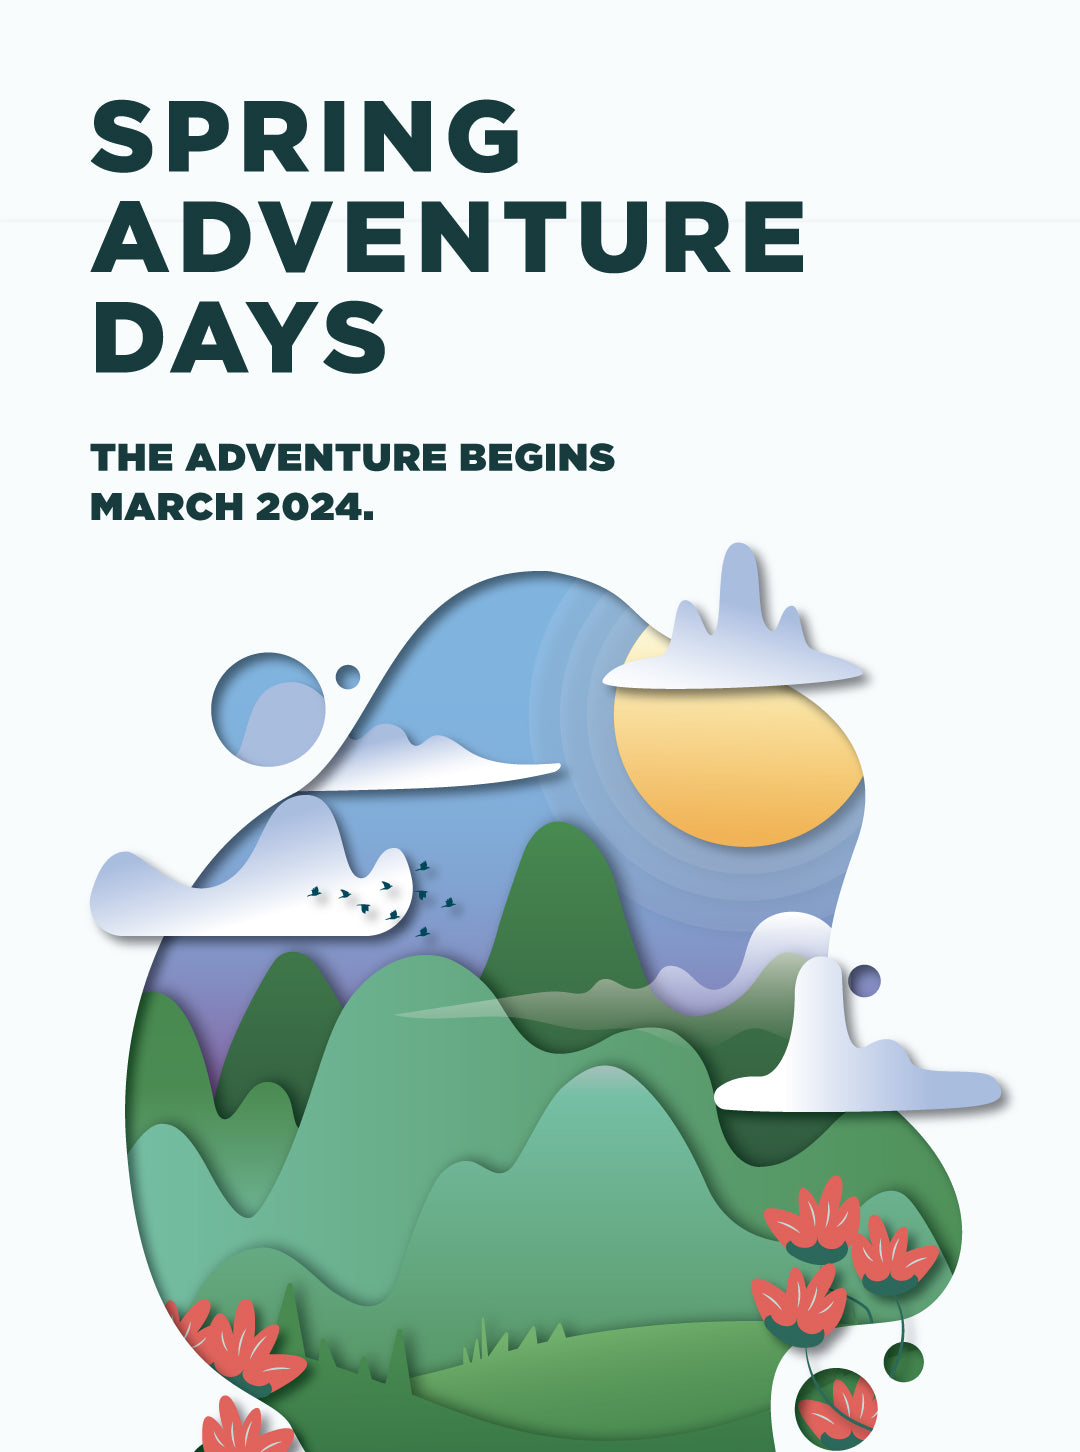 Spring Adventure Days. The adventure begins March 2024.